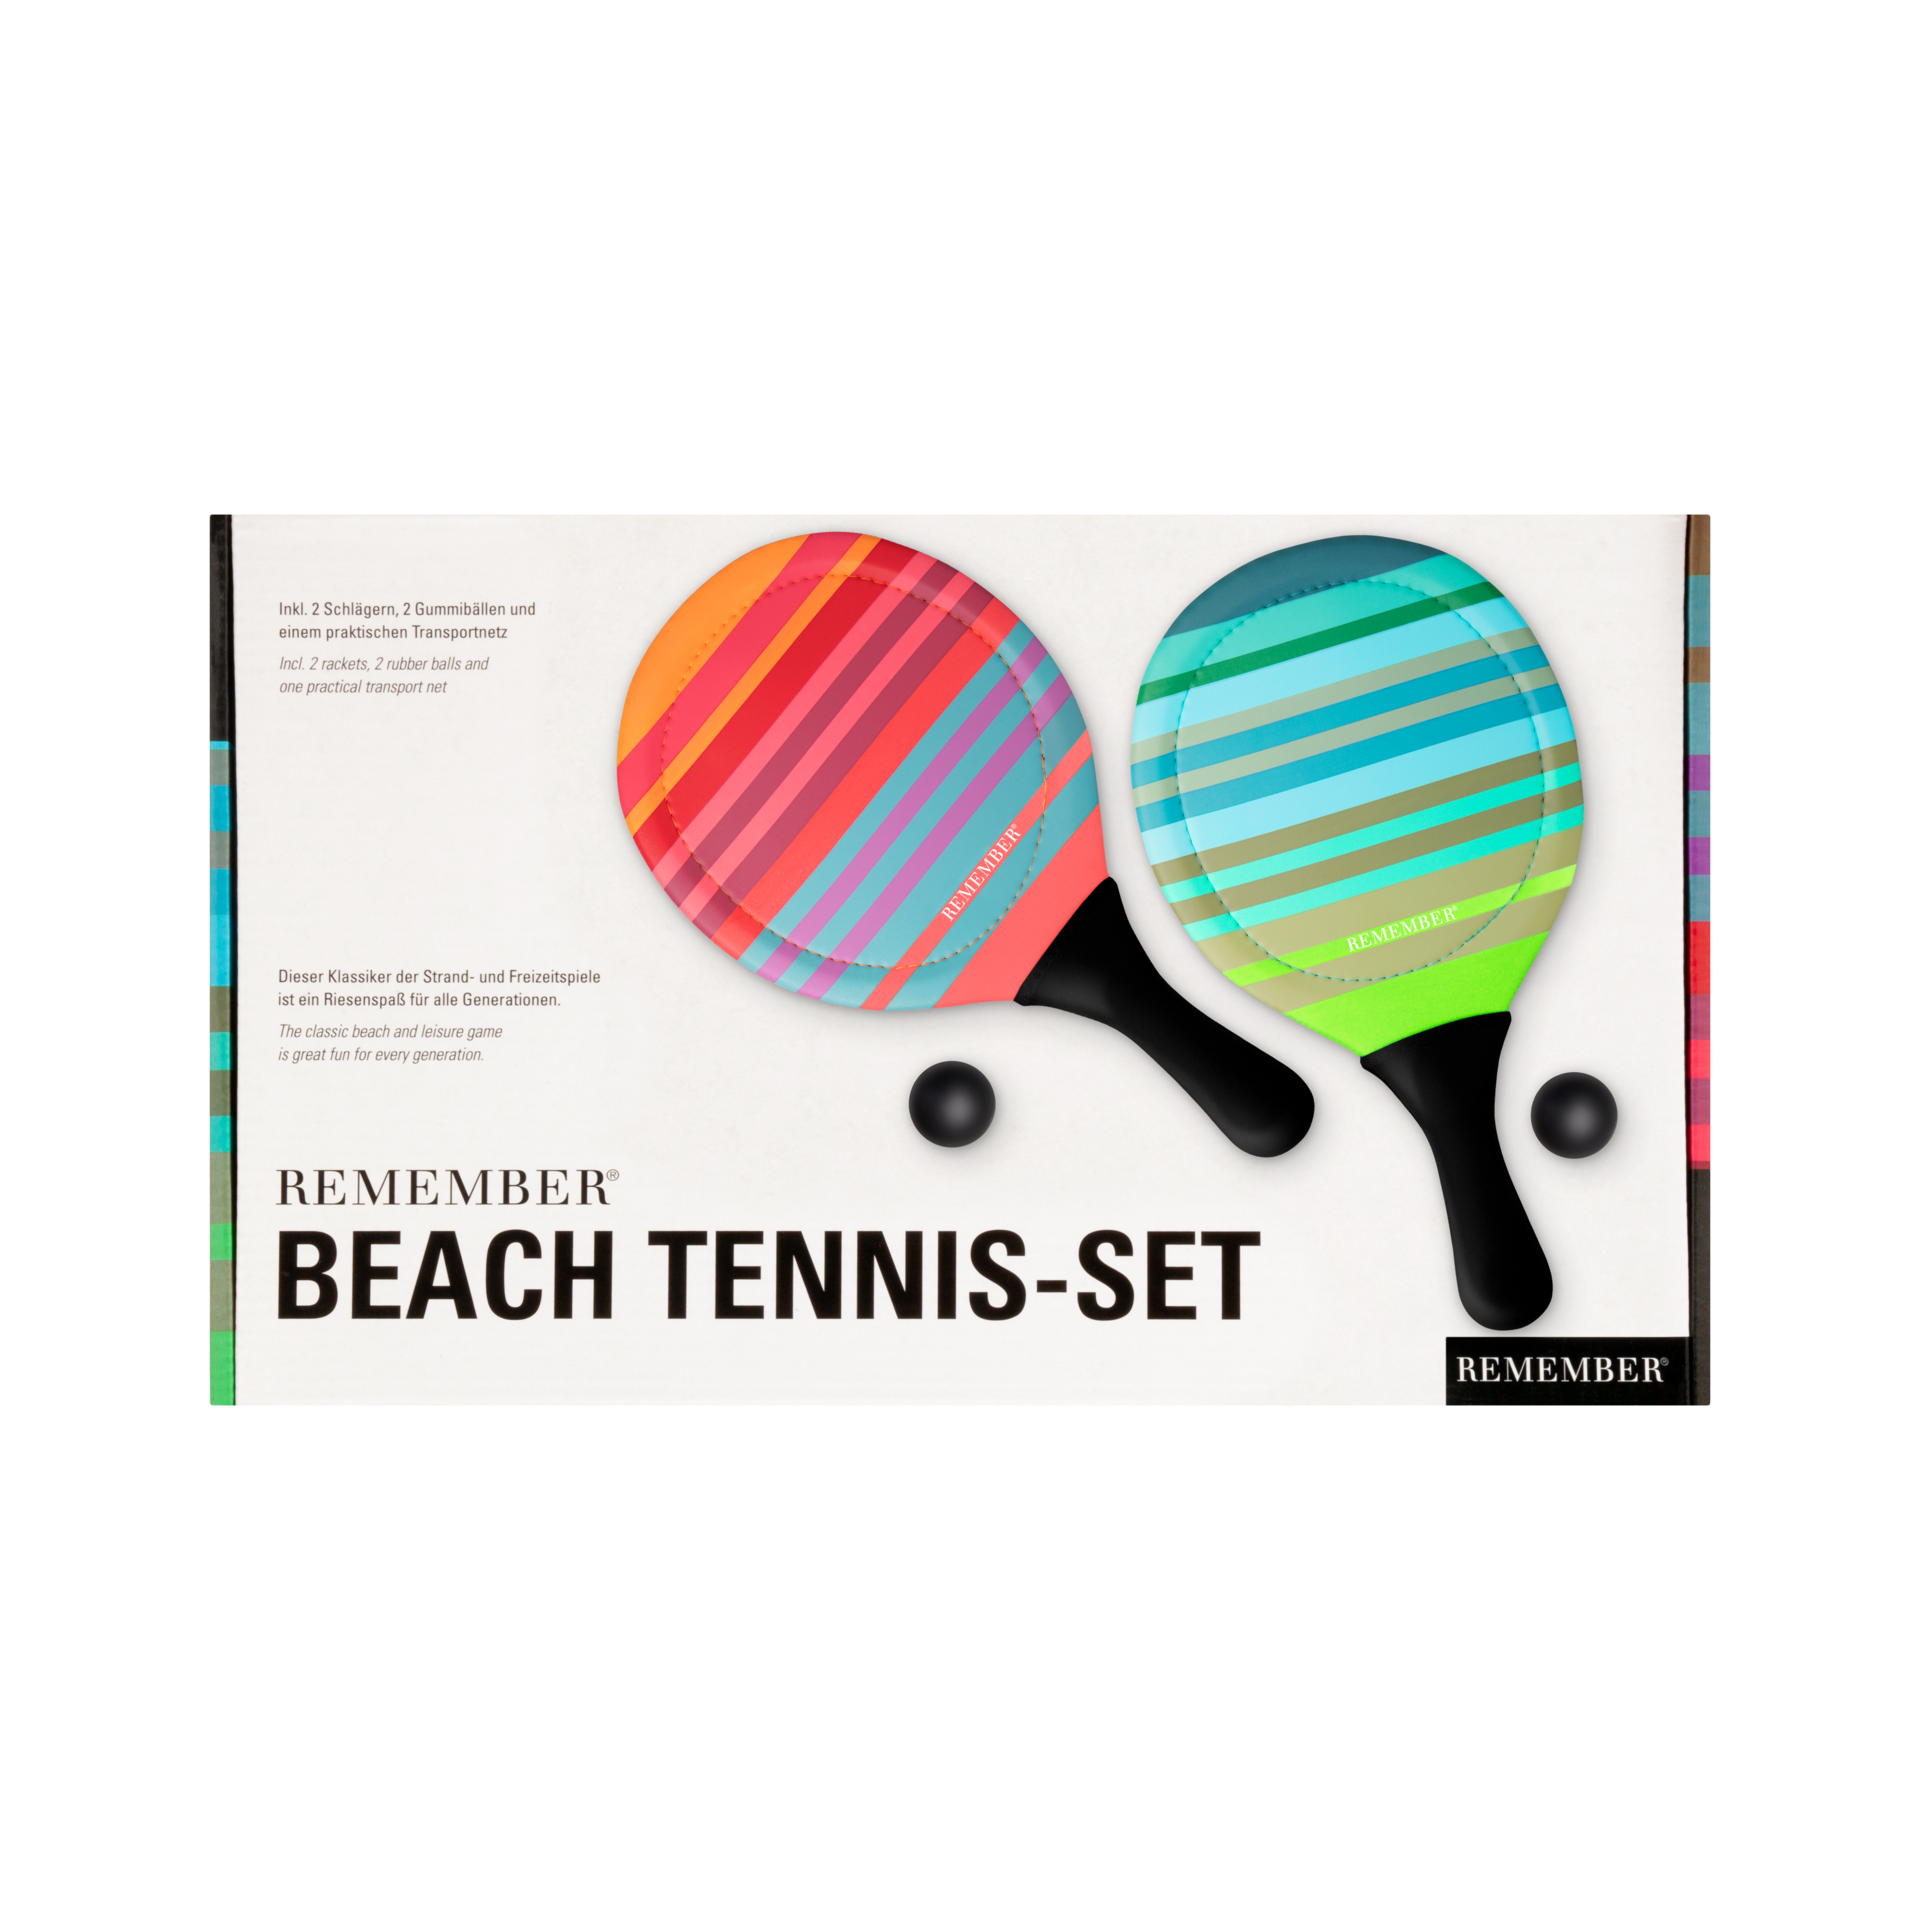 Beach Tennis-Set